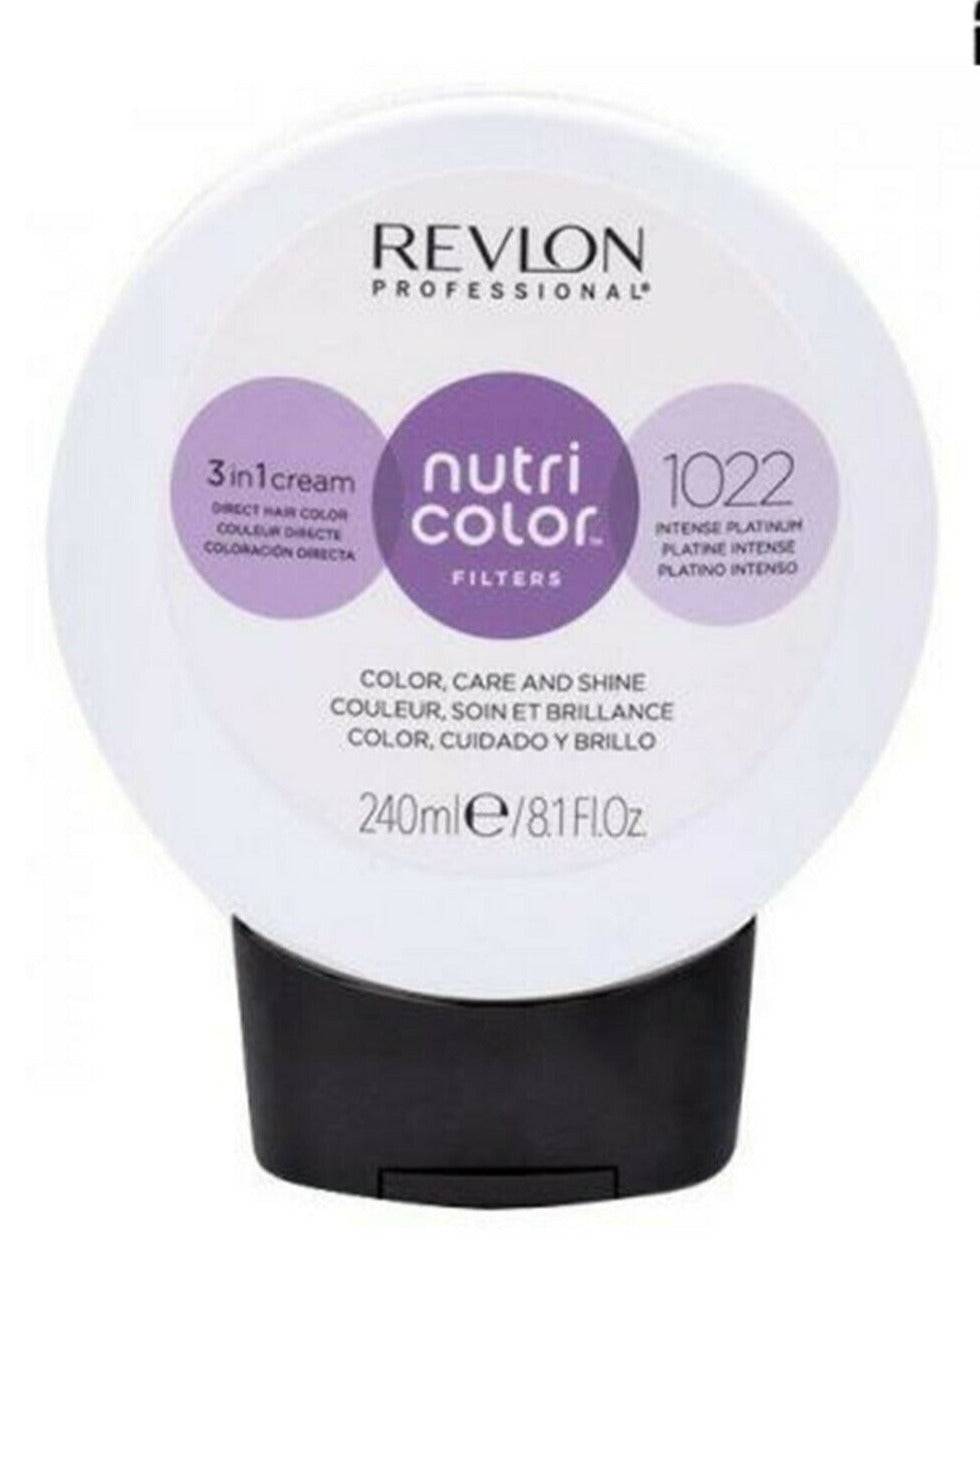 Revlon Professional Nutri Color Creme 3 in 1 Cream #1022 Intense Platinum 240ml - On Line Hair Depot